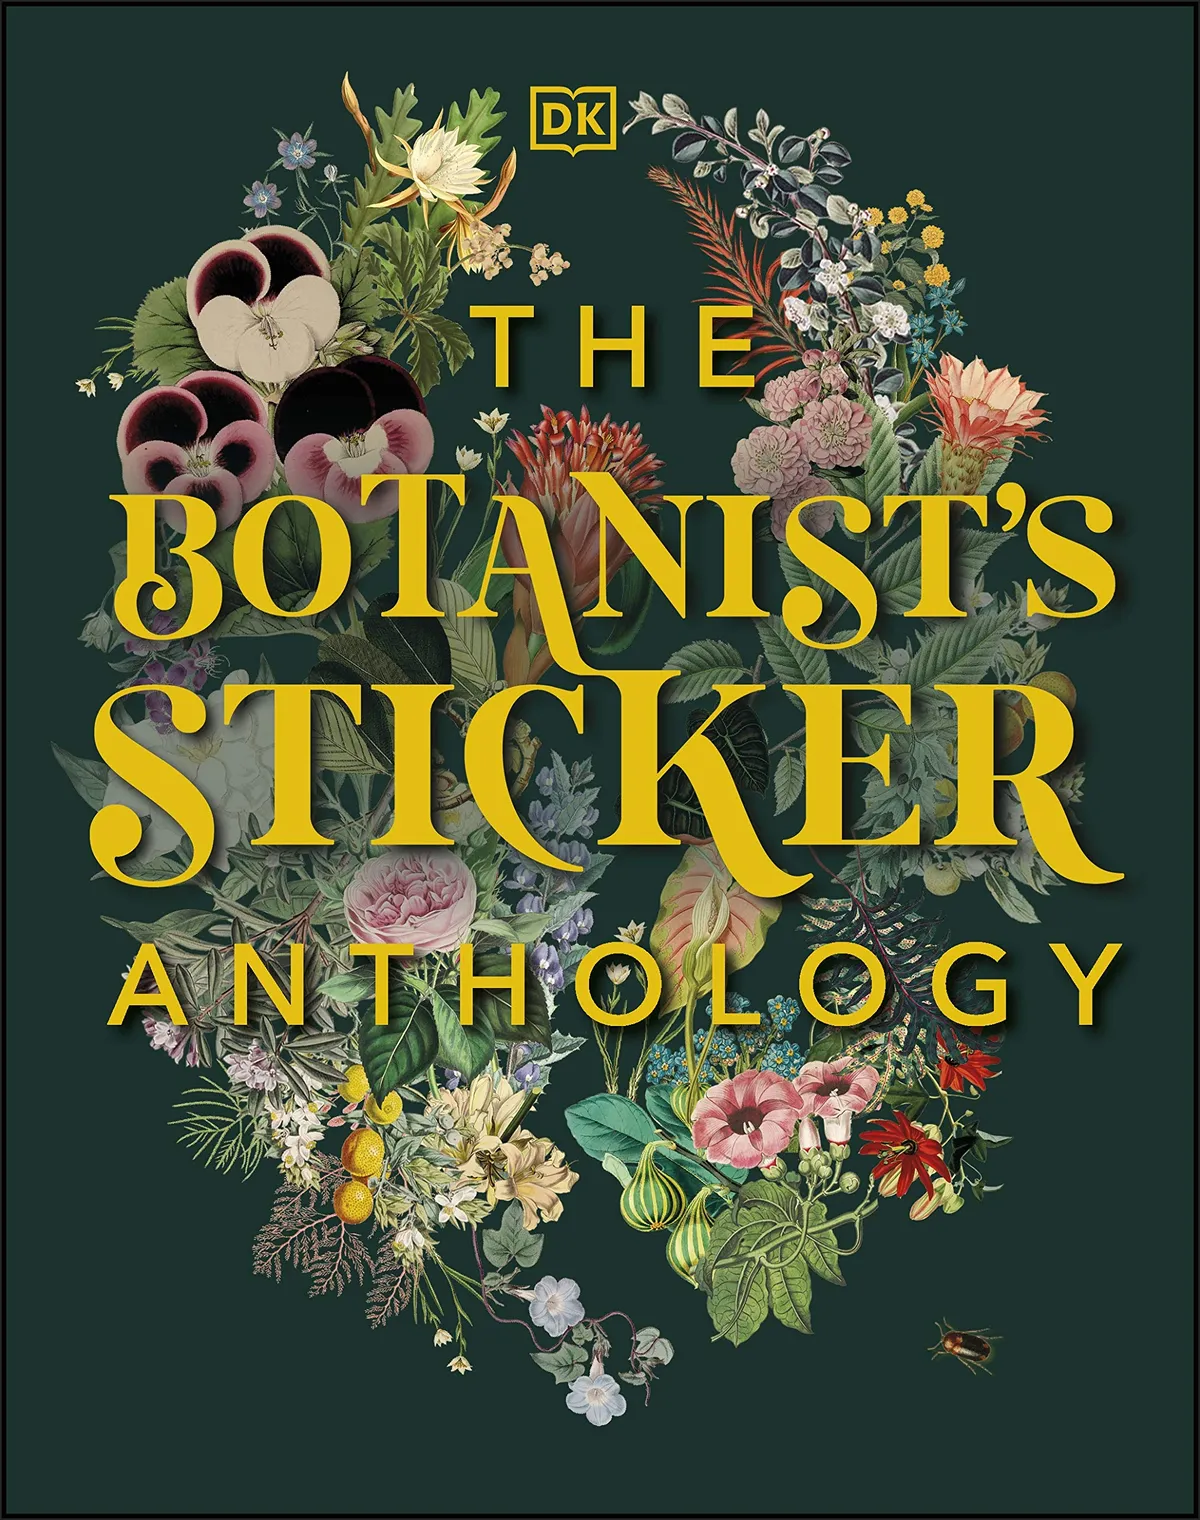 Botanist Sticker Anthology